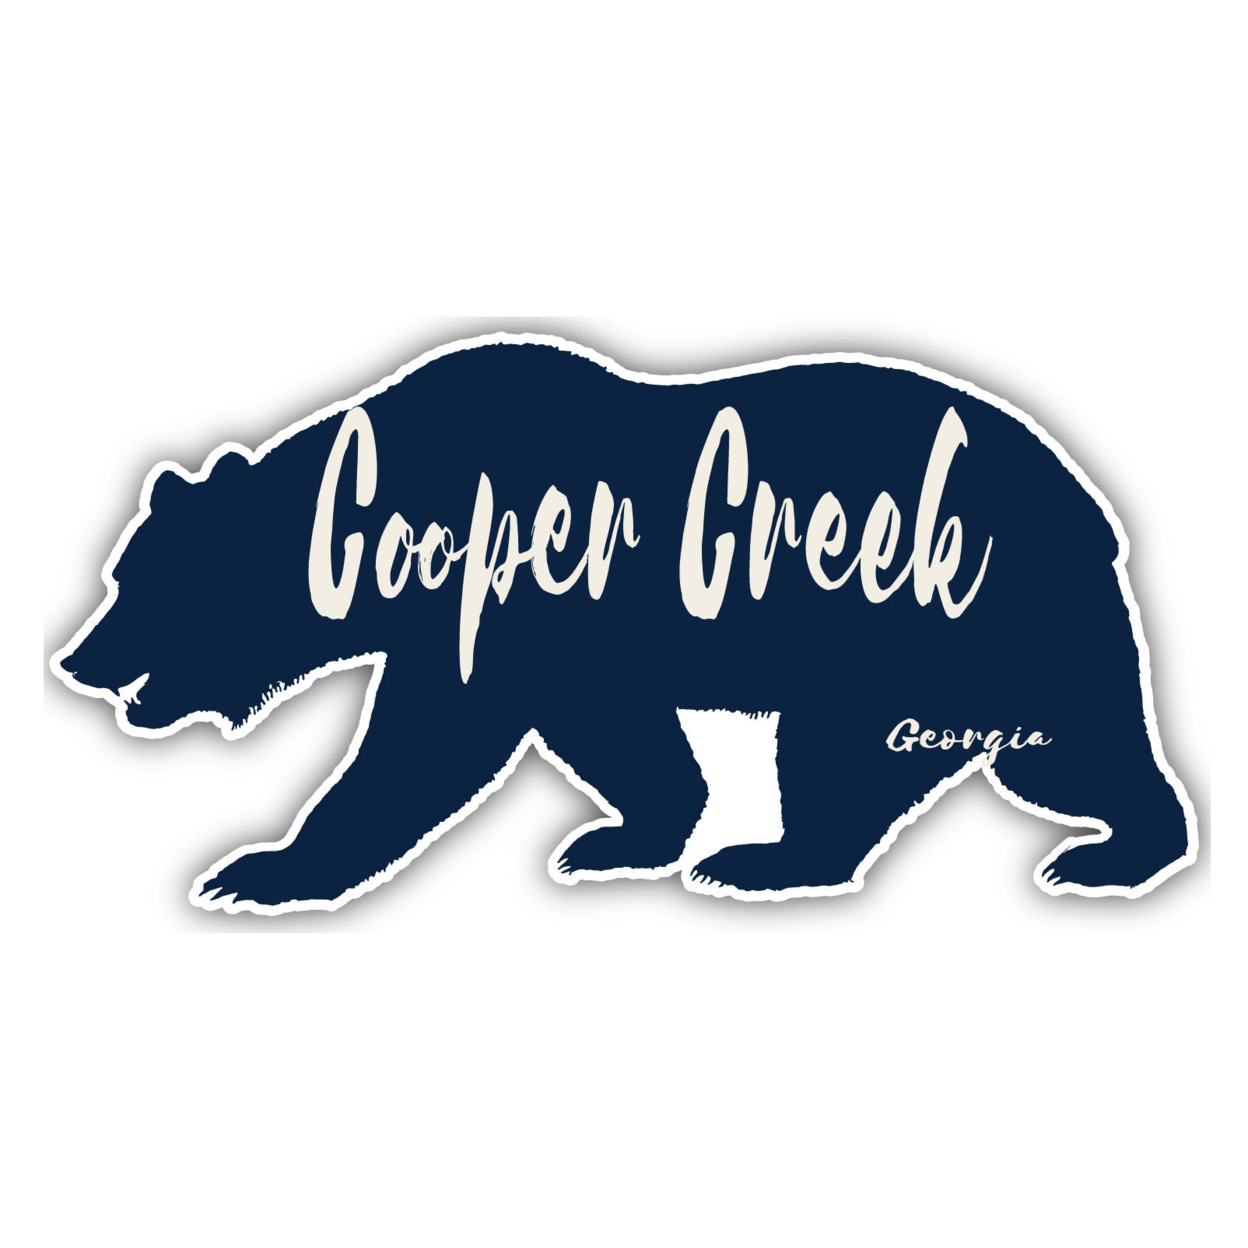 Cooper Creek Georgia Souvenir Decorative Stickers (Choose Theme And Size) - Single Unit, 8-Inch, Bear